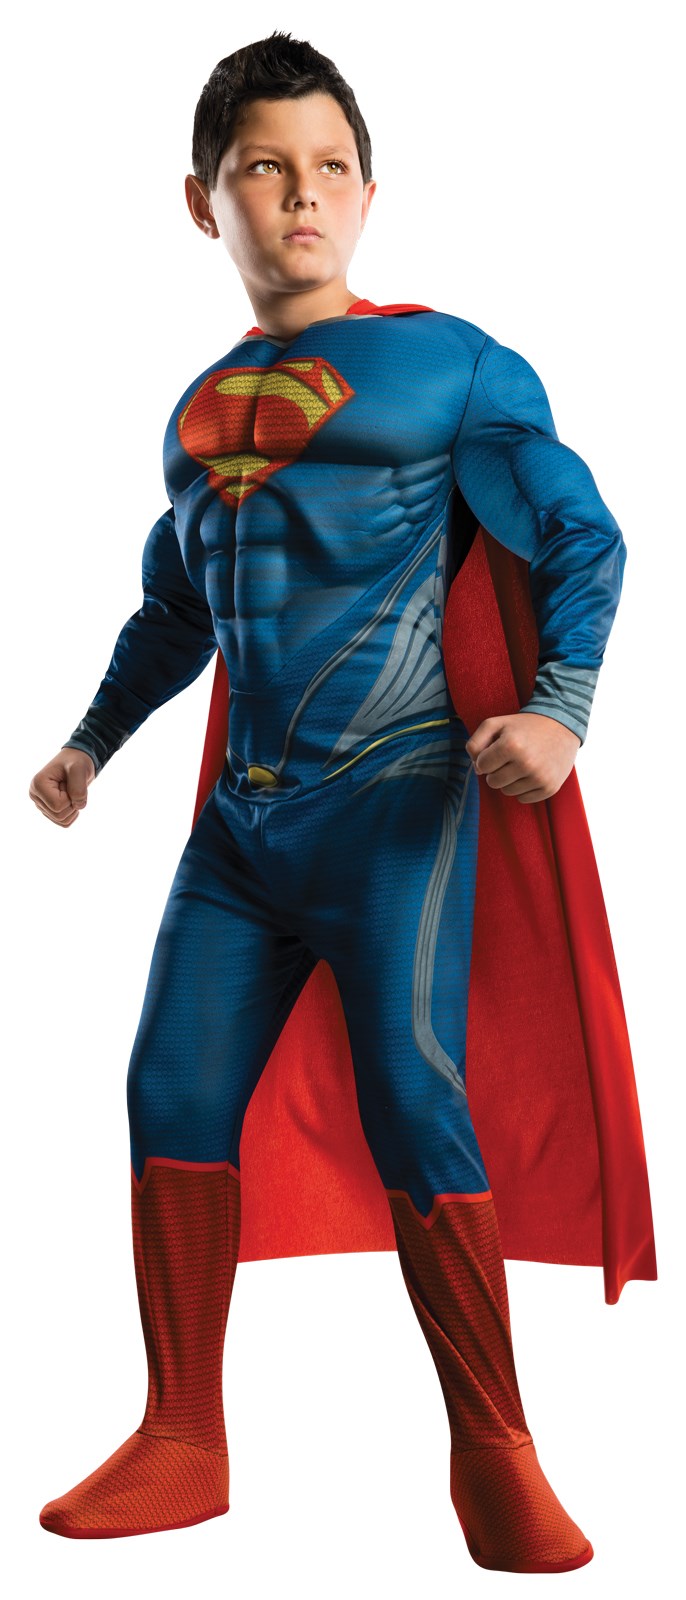 Superman Man of Steel Deluxe Toddler / Child Costume